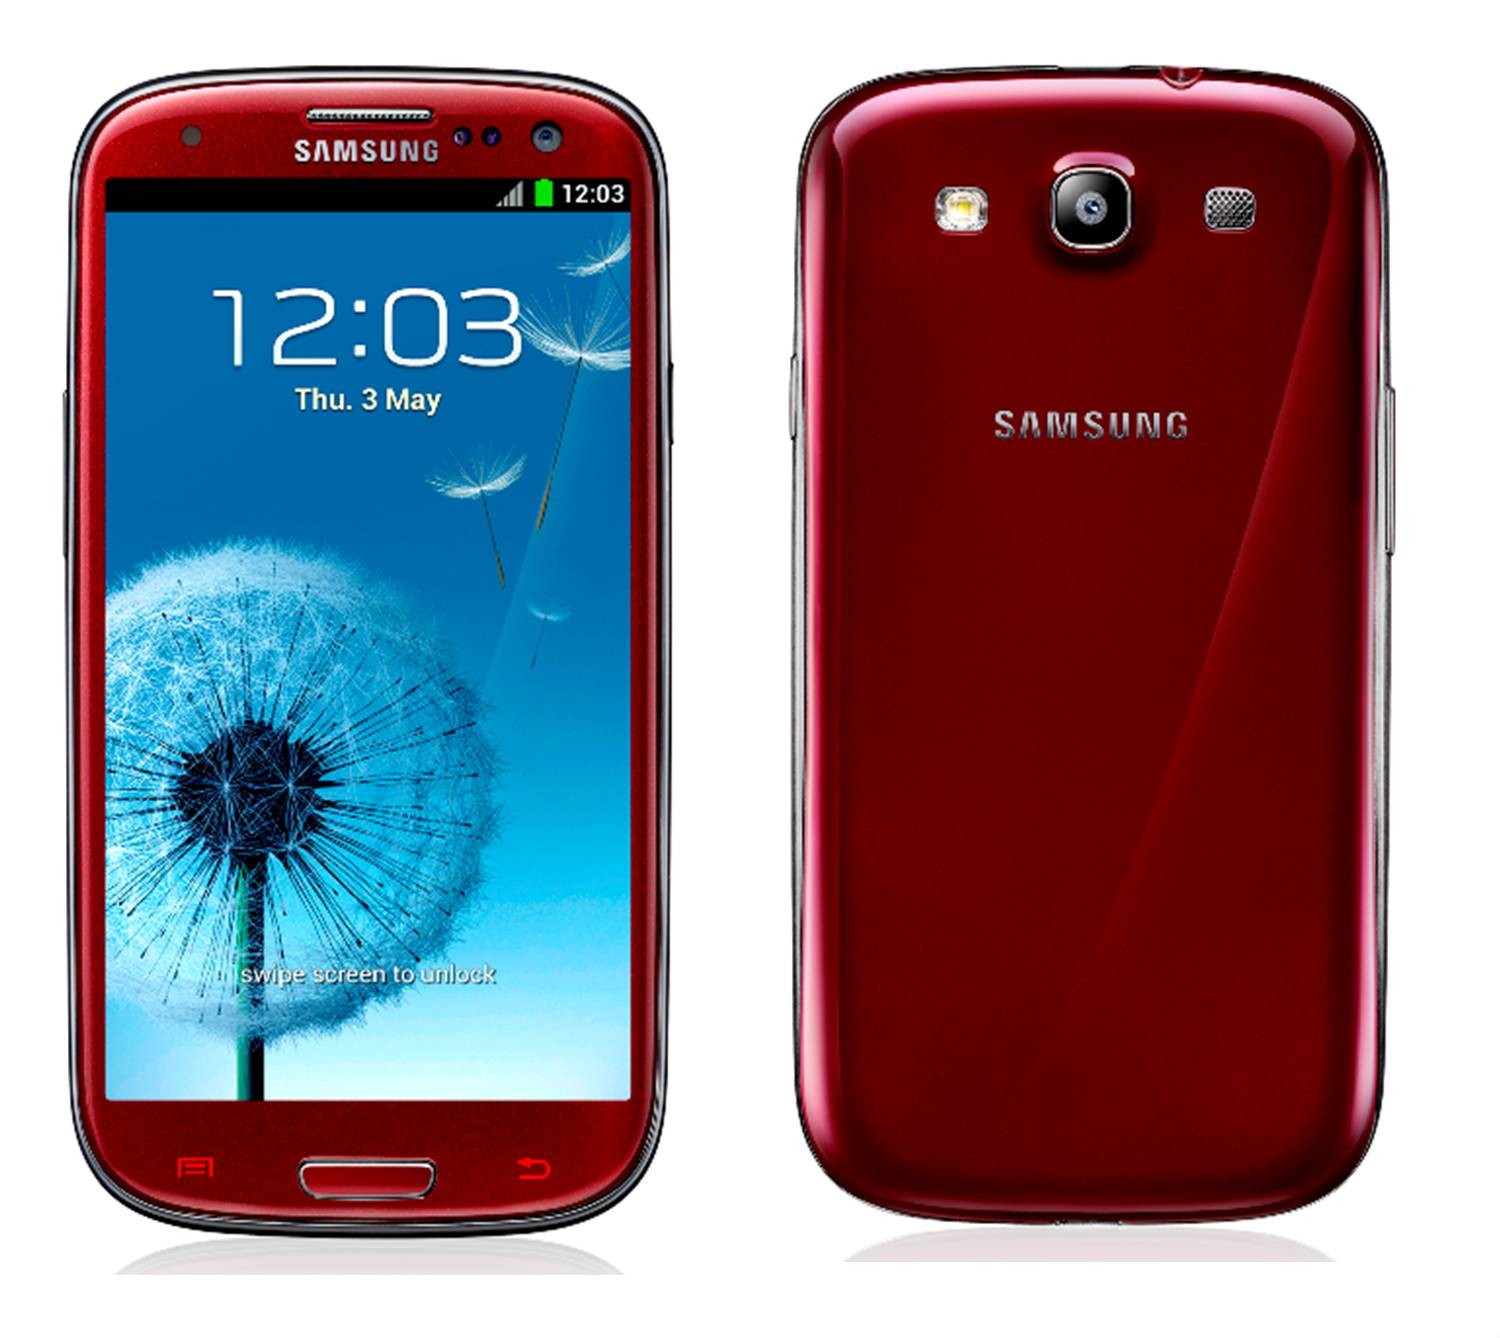 Galaxy s 25. Samsung gt-i9300. Самсунг s3 Duos. Самсунг gt i9300. Samsung 9300.